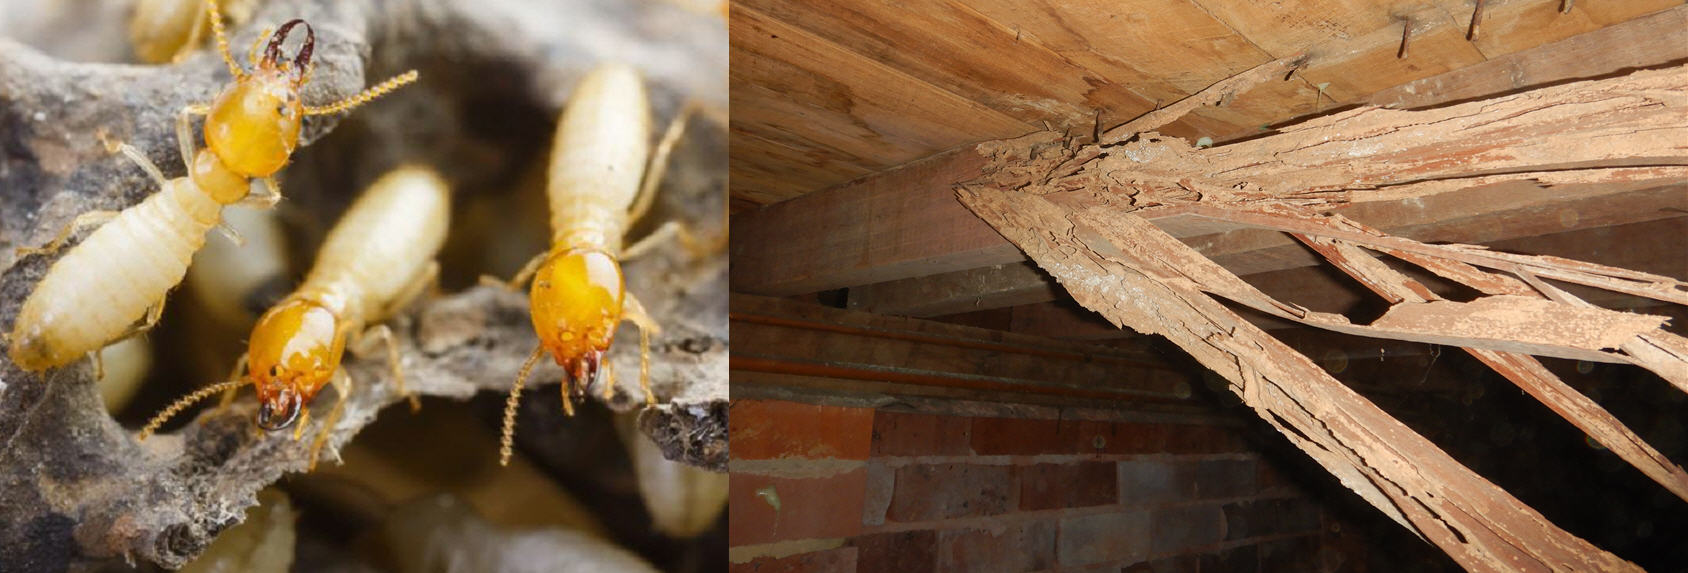 Termite-pest-control-sydney-banner-2.jpg